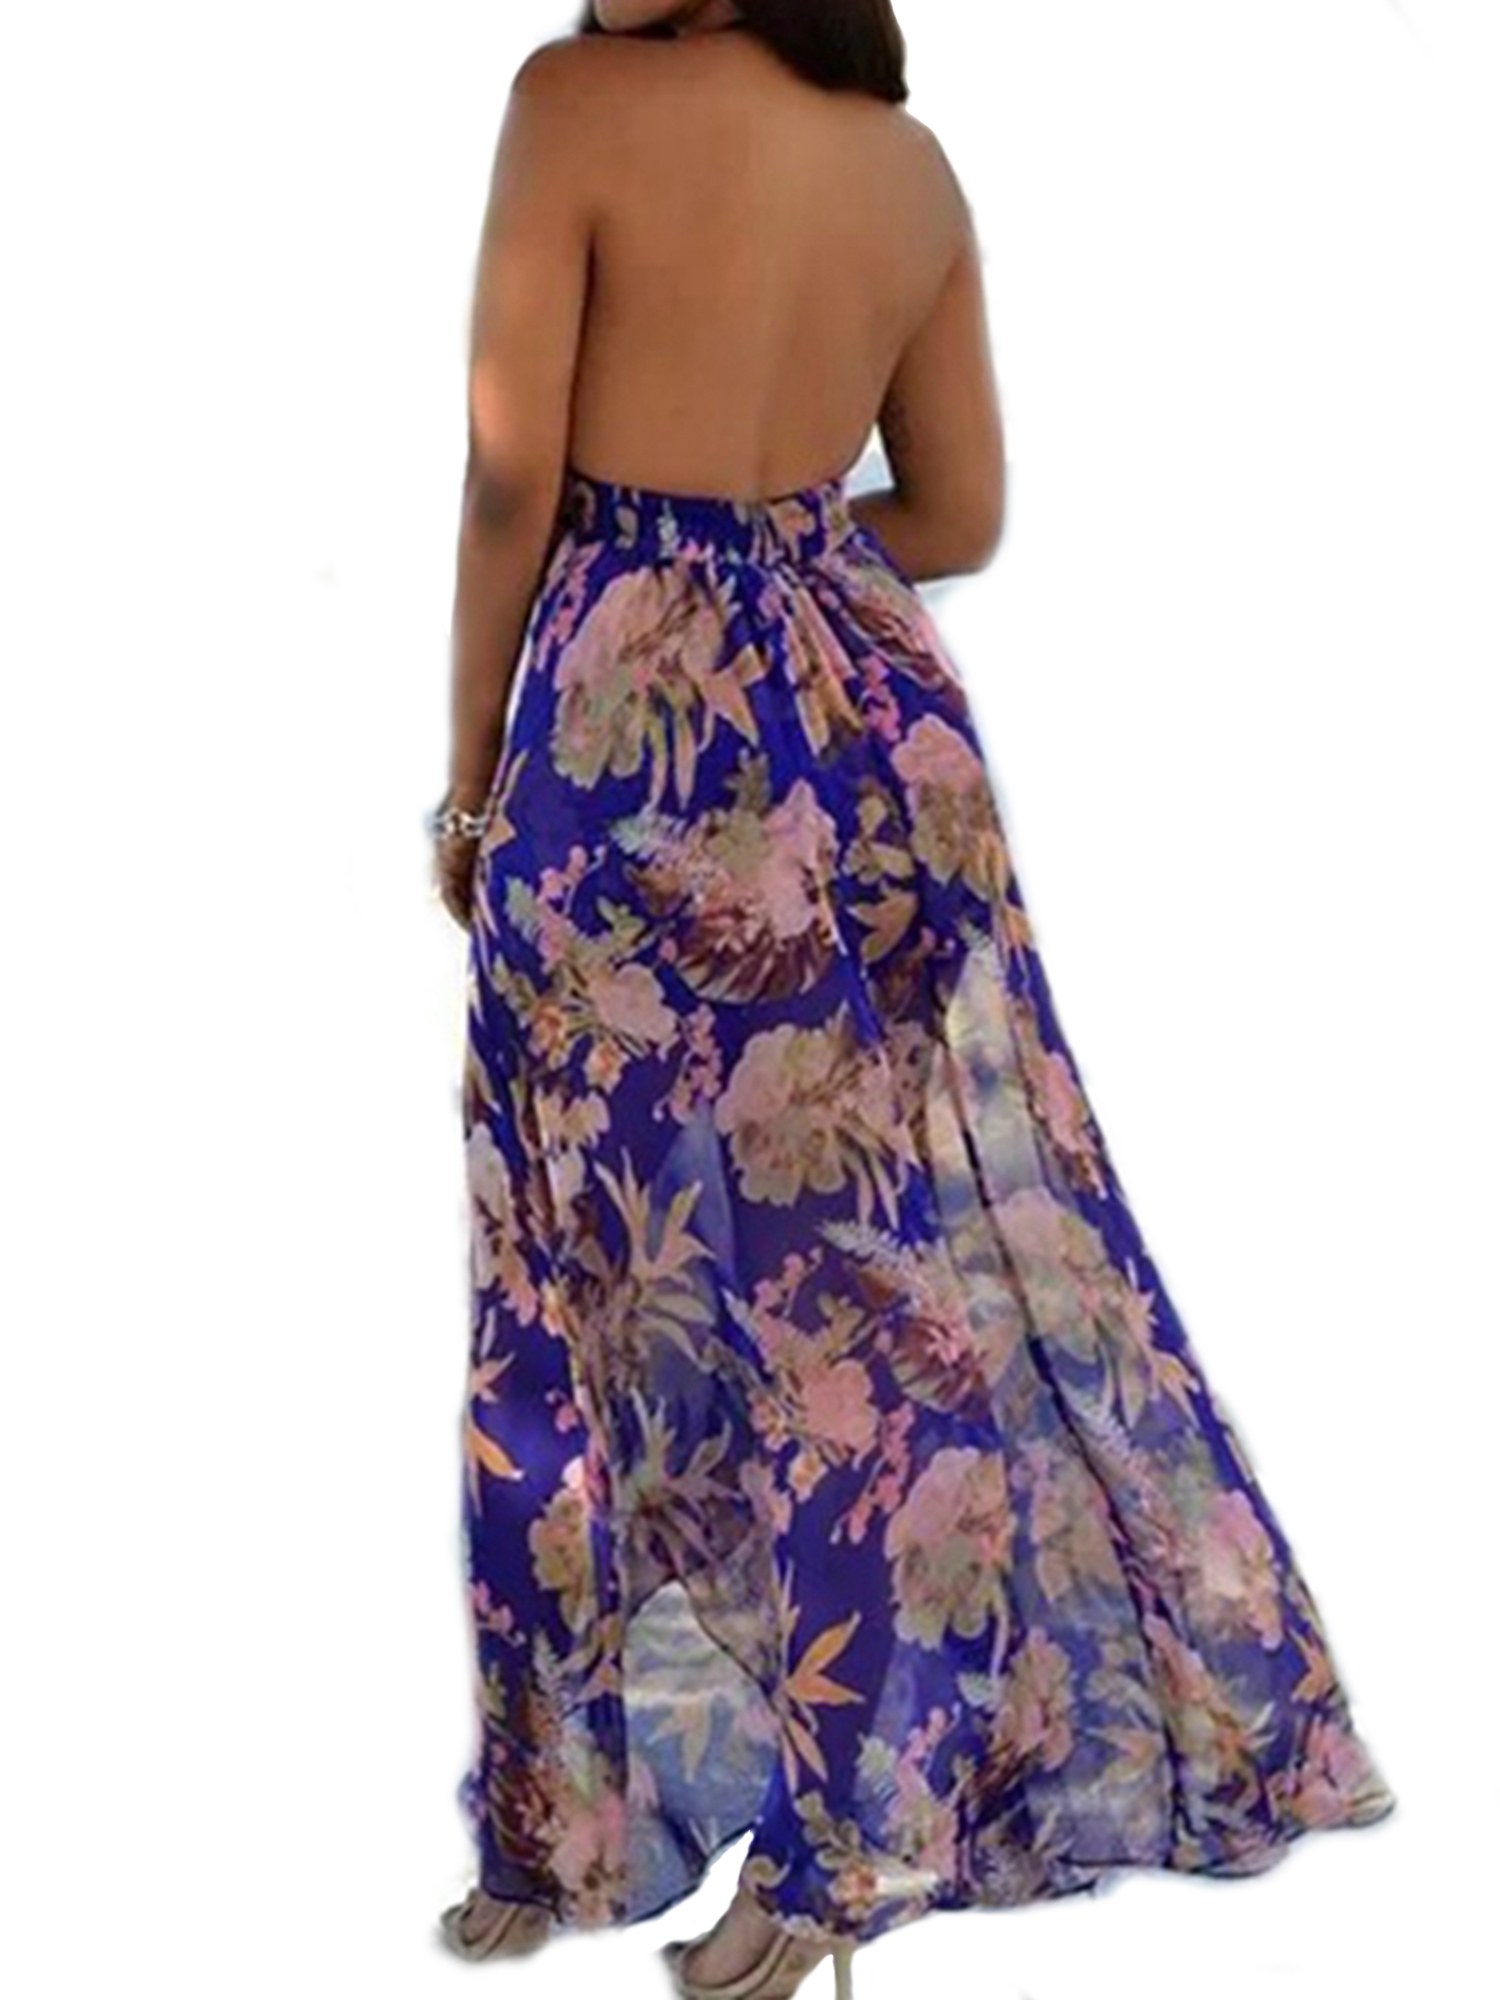 Women Sleeveless Halter V Neck Summer Party Romper Dress Floral Print Long  Split Maxi Playsuit Jumpsuit Beach Sunress 